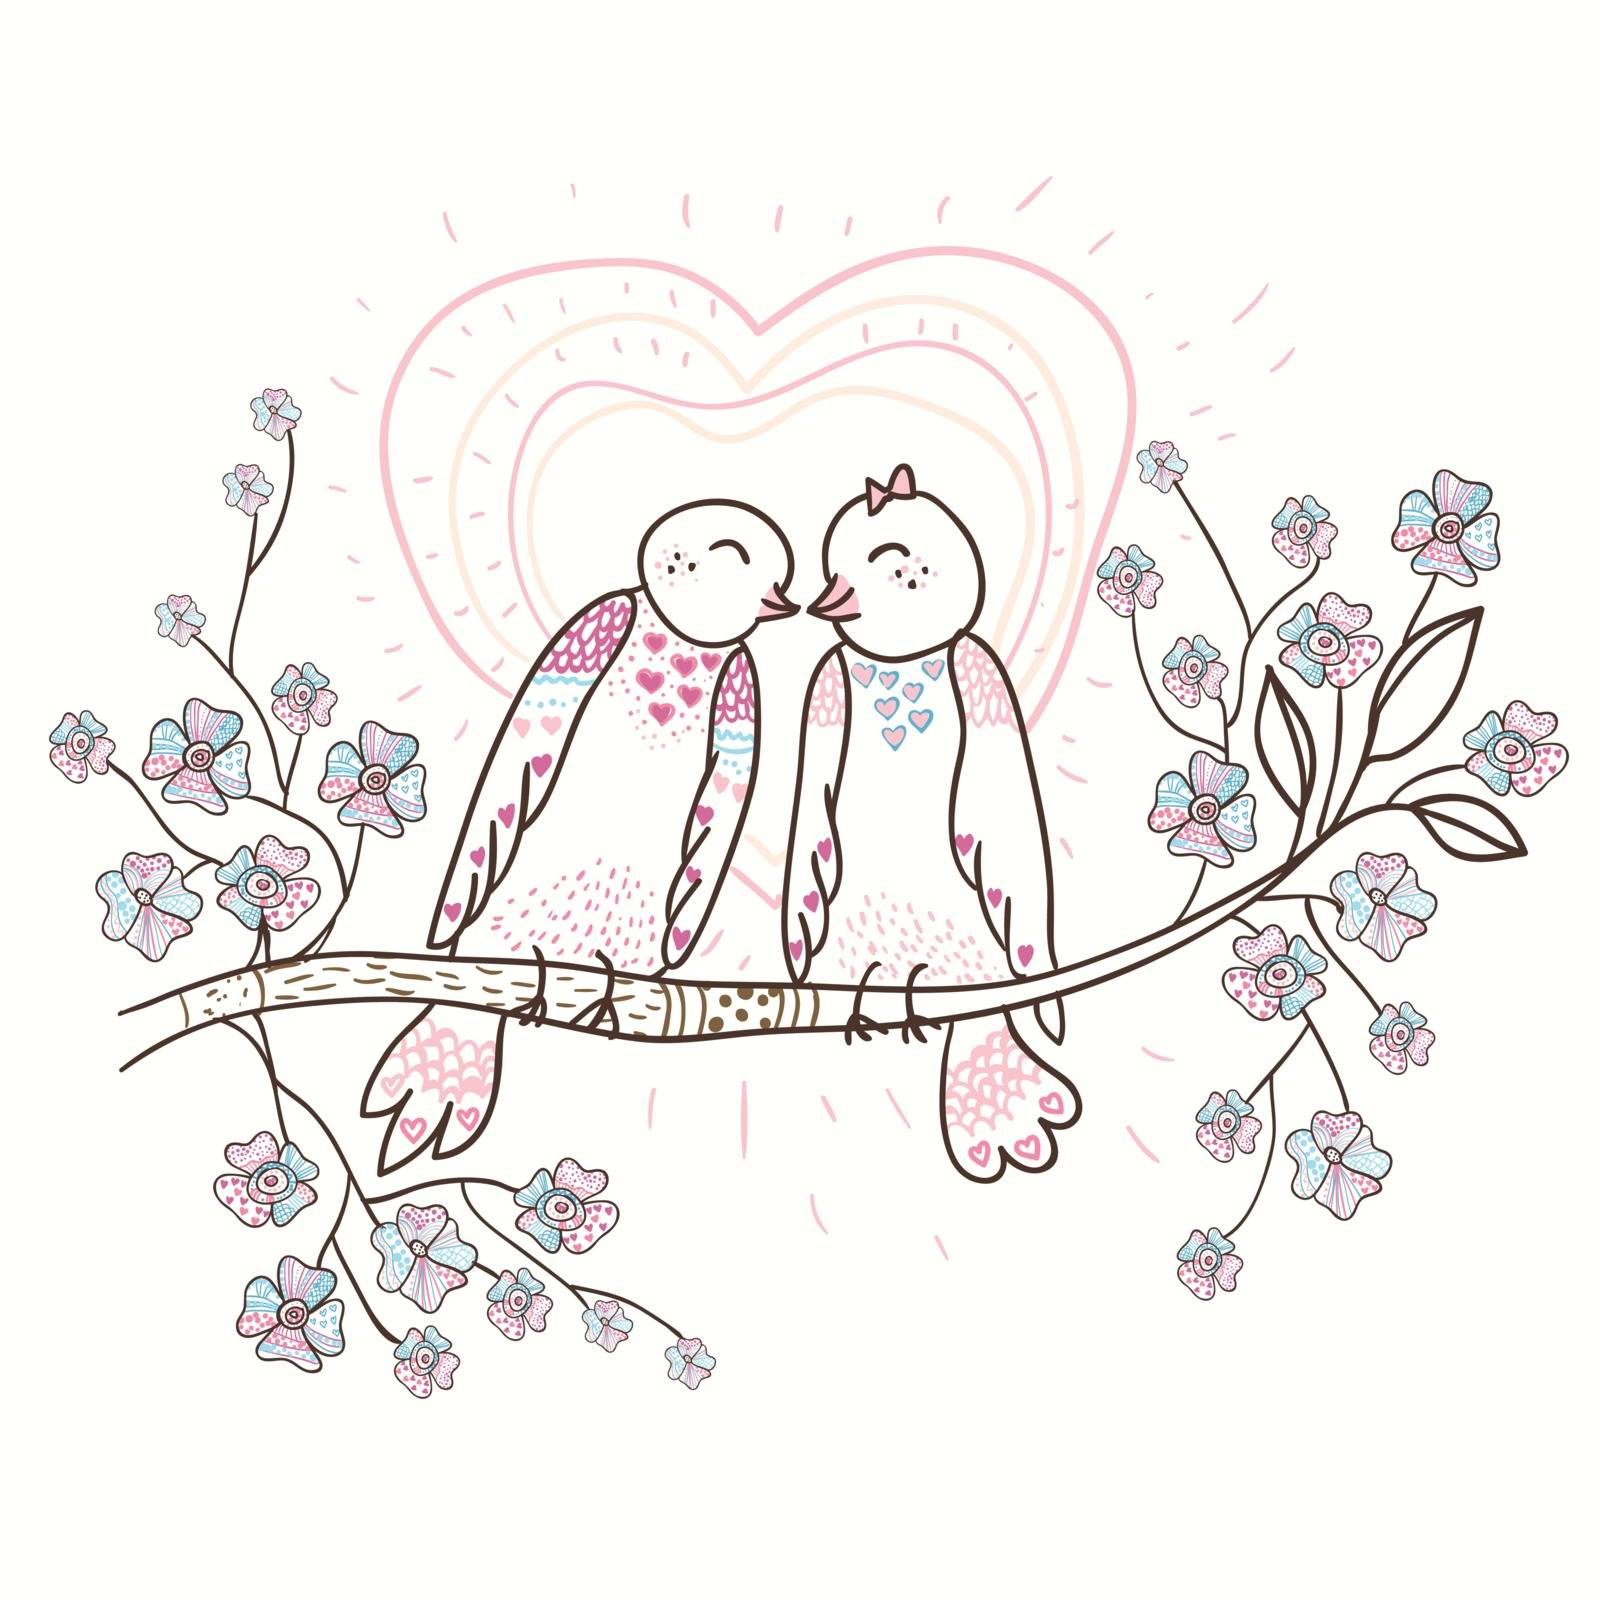 Illustration of Love Birds  on a branch